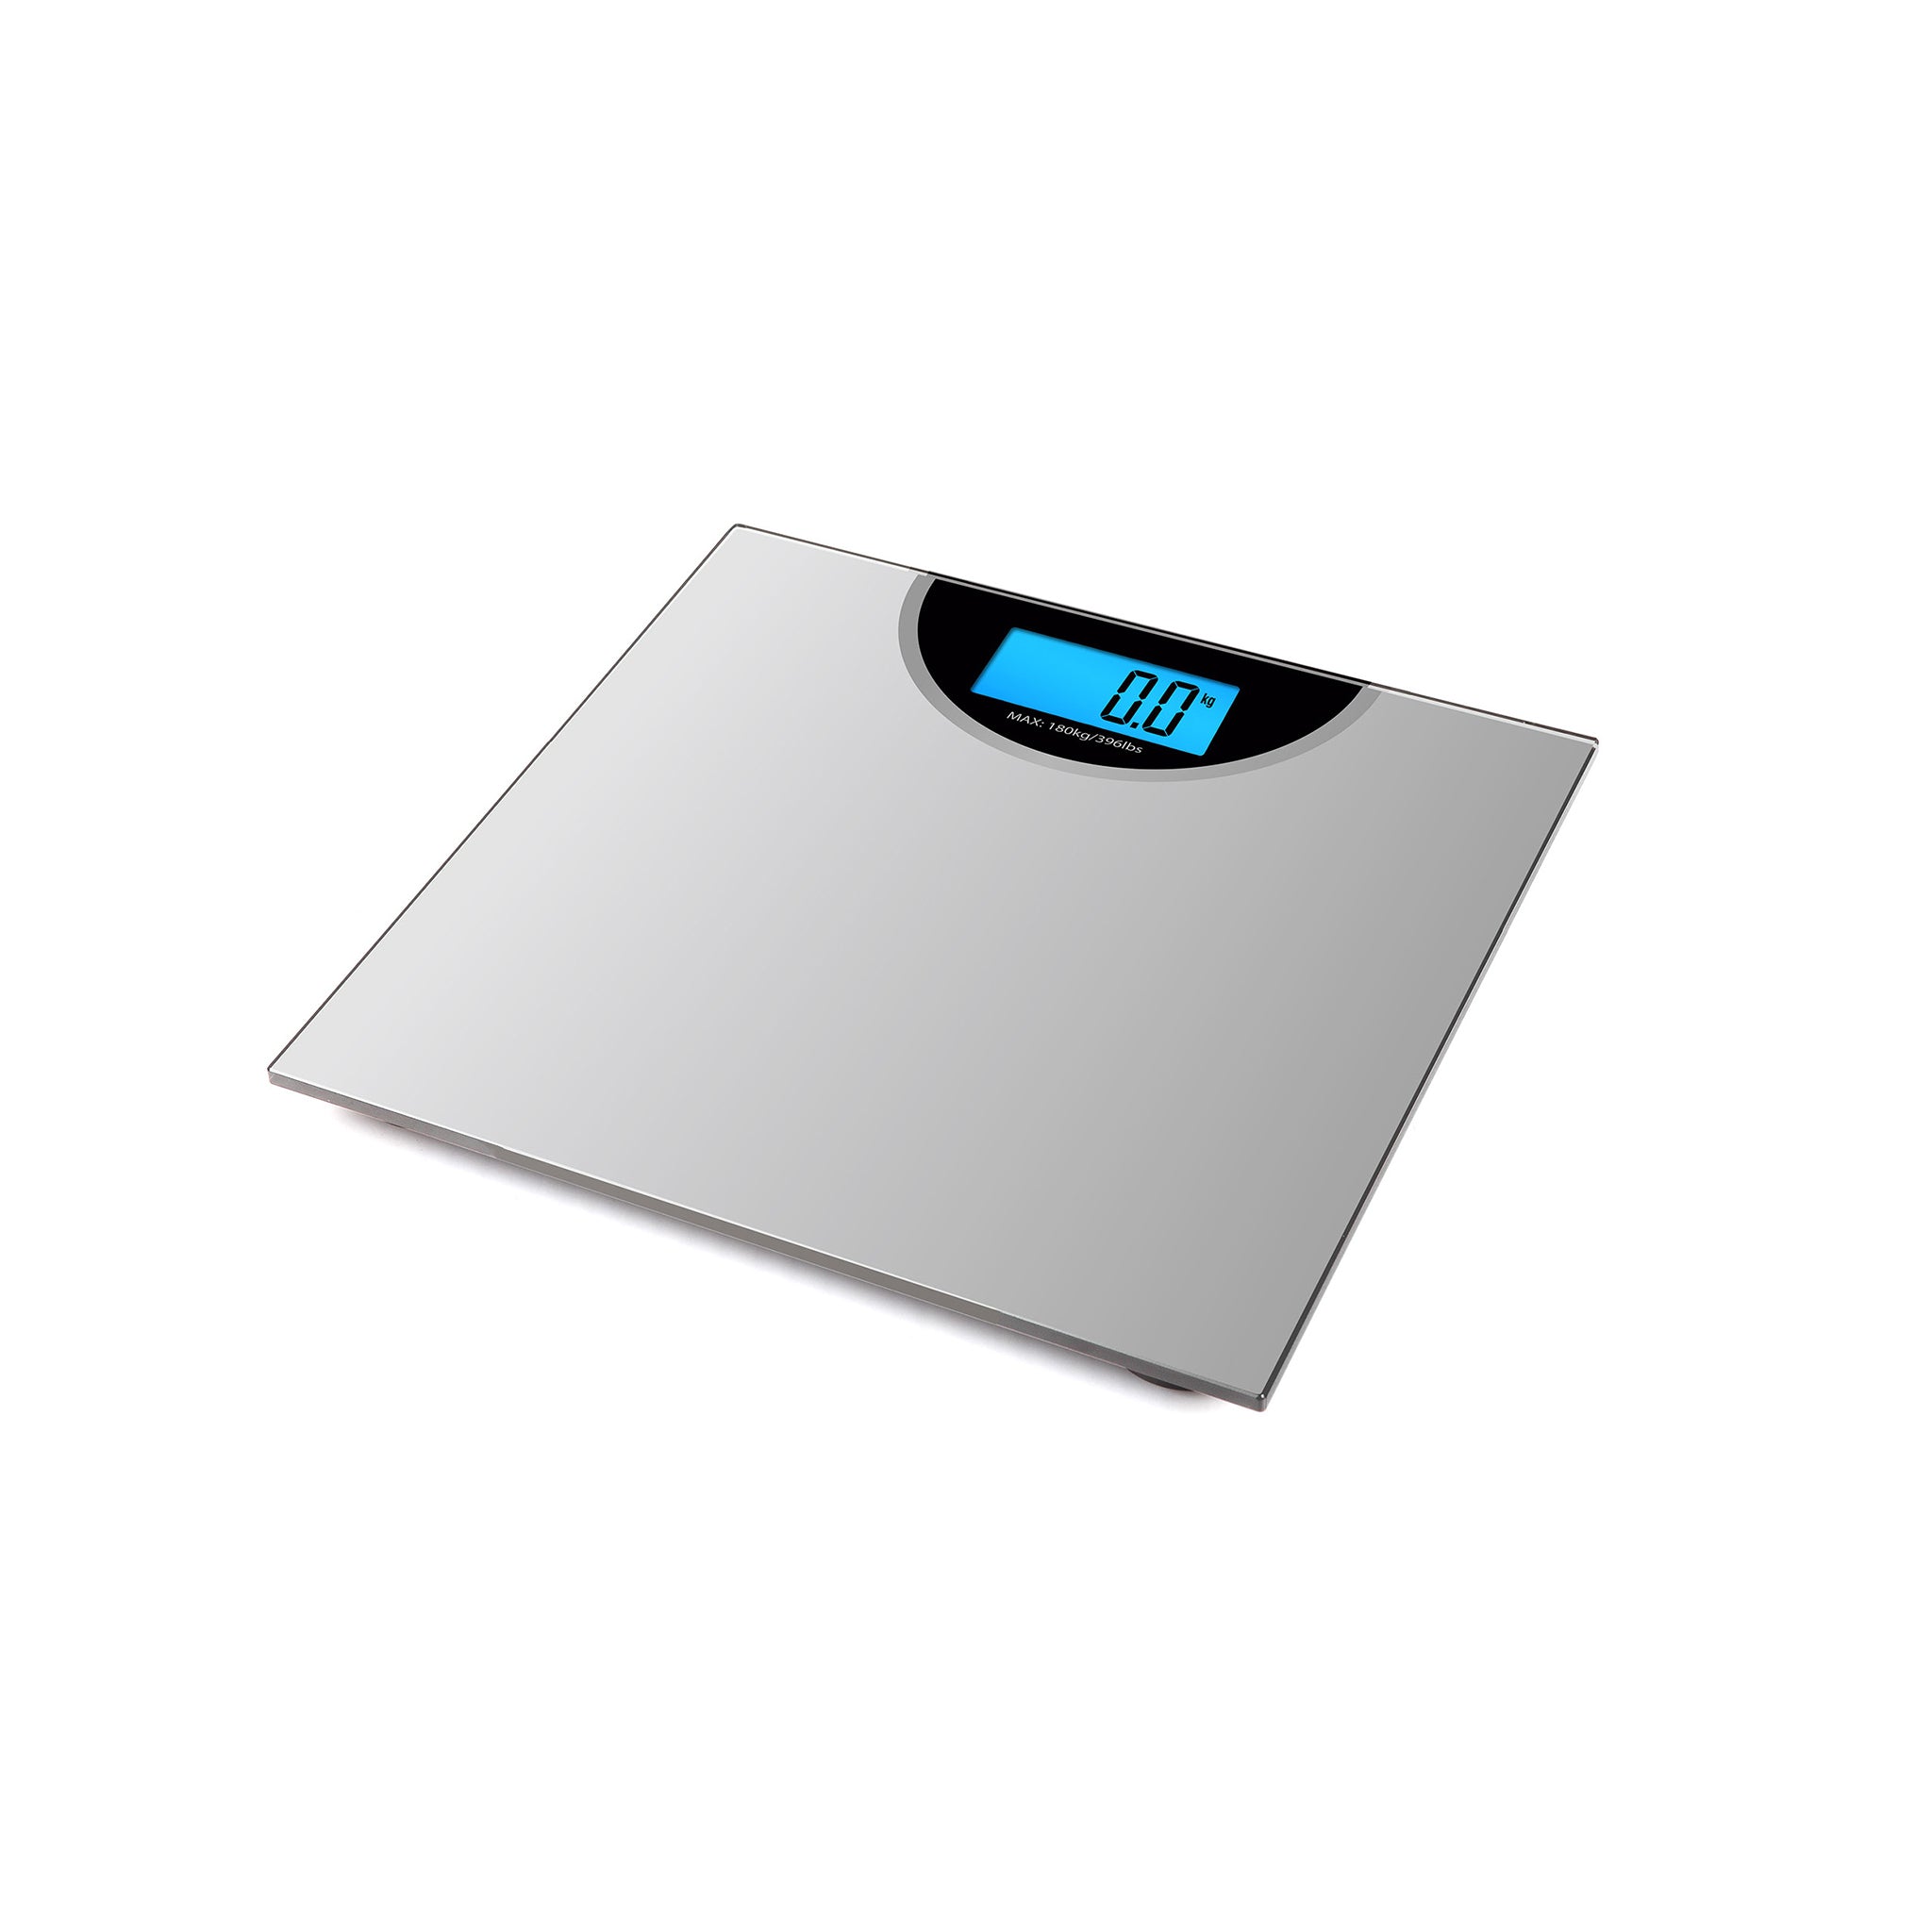 396lbs /180kg Digital Body Weight Scale LCD Bathroom Scales